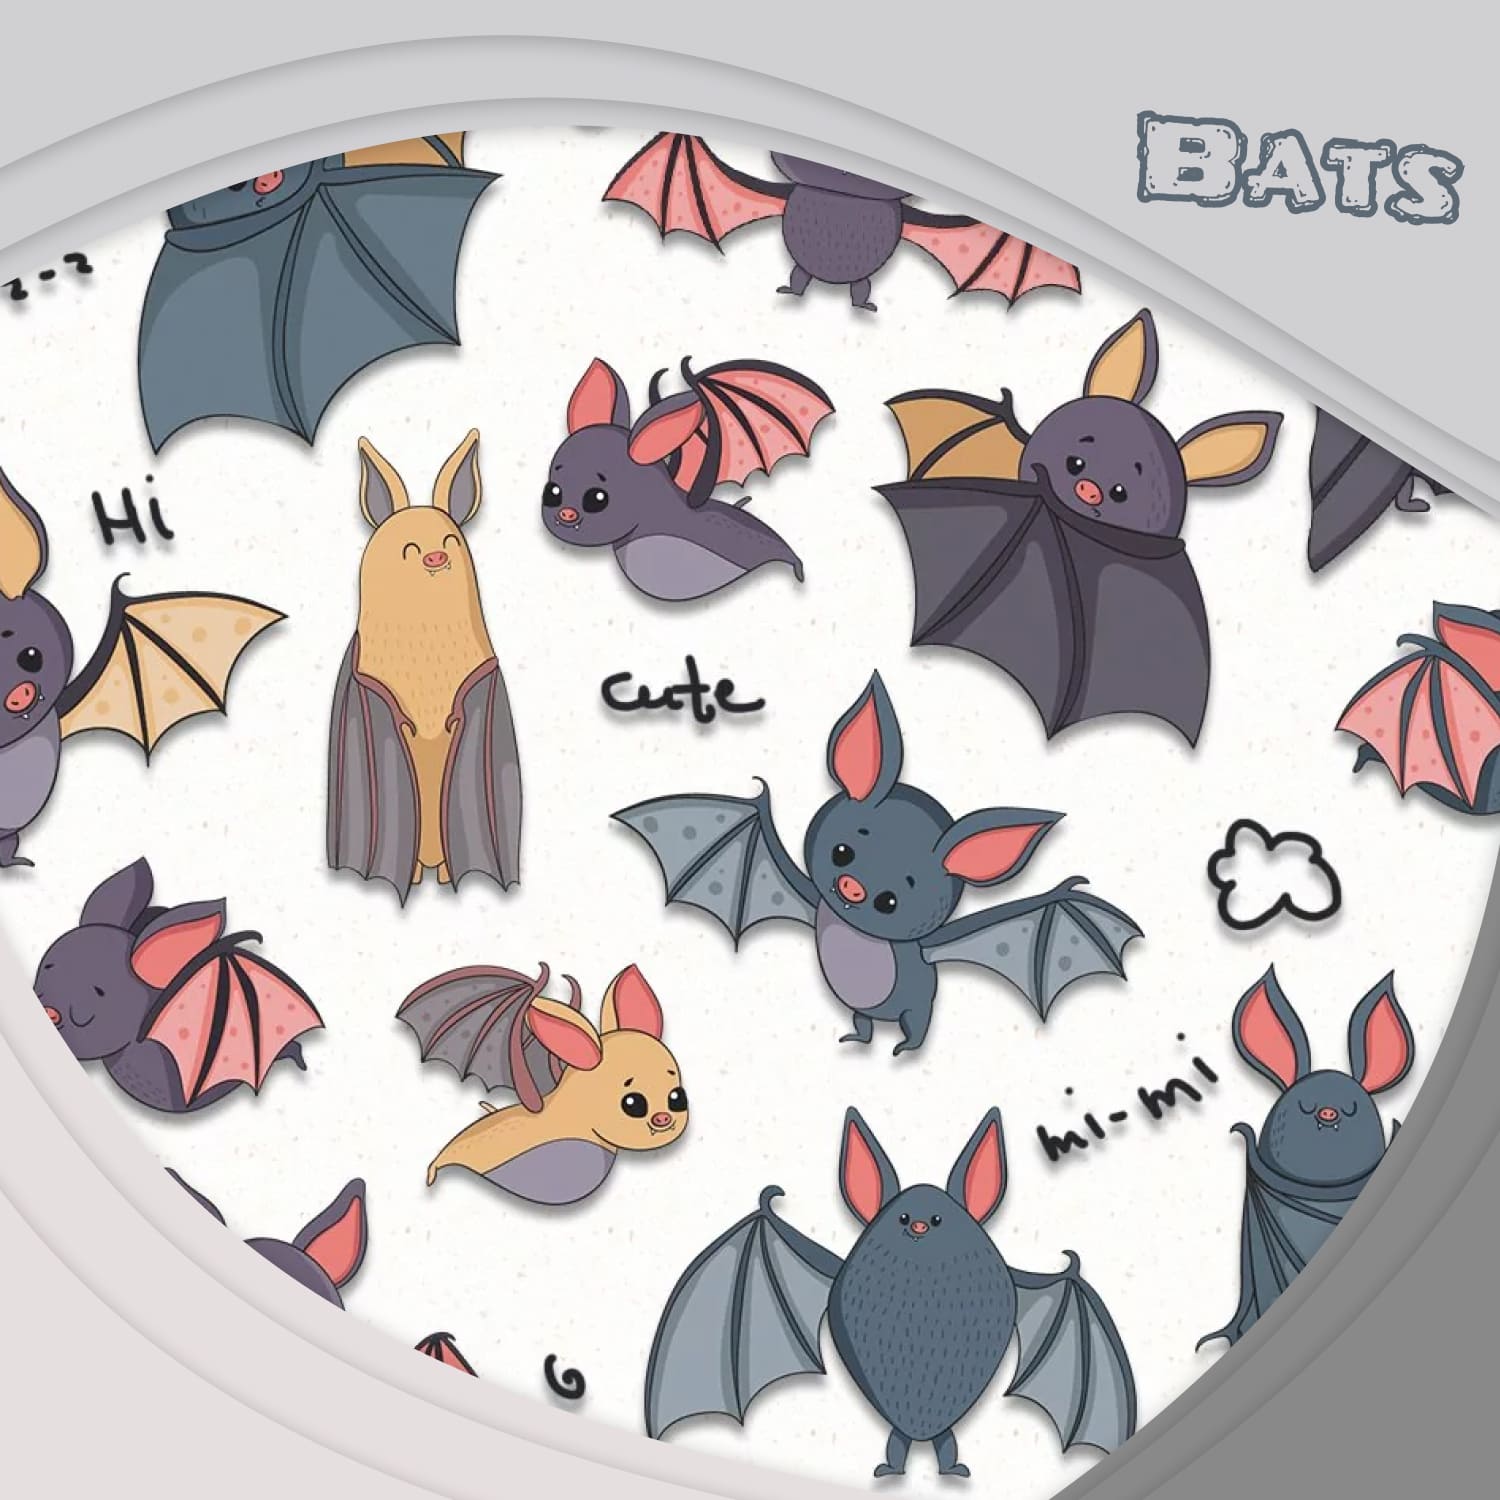 Bats Designs cover image.